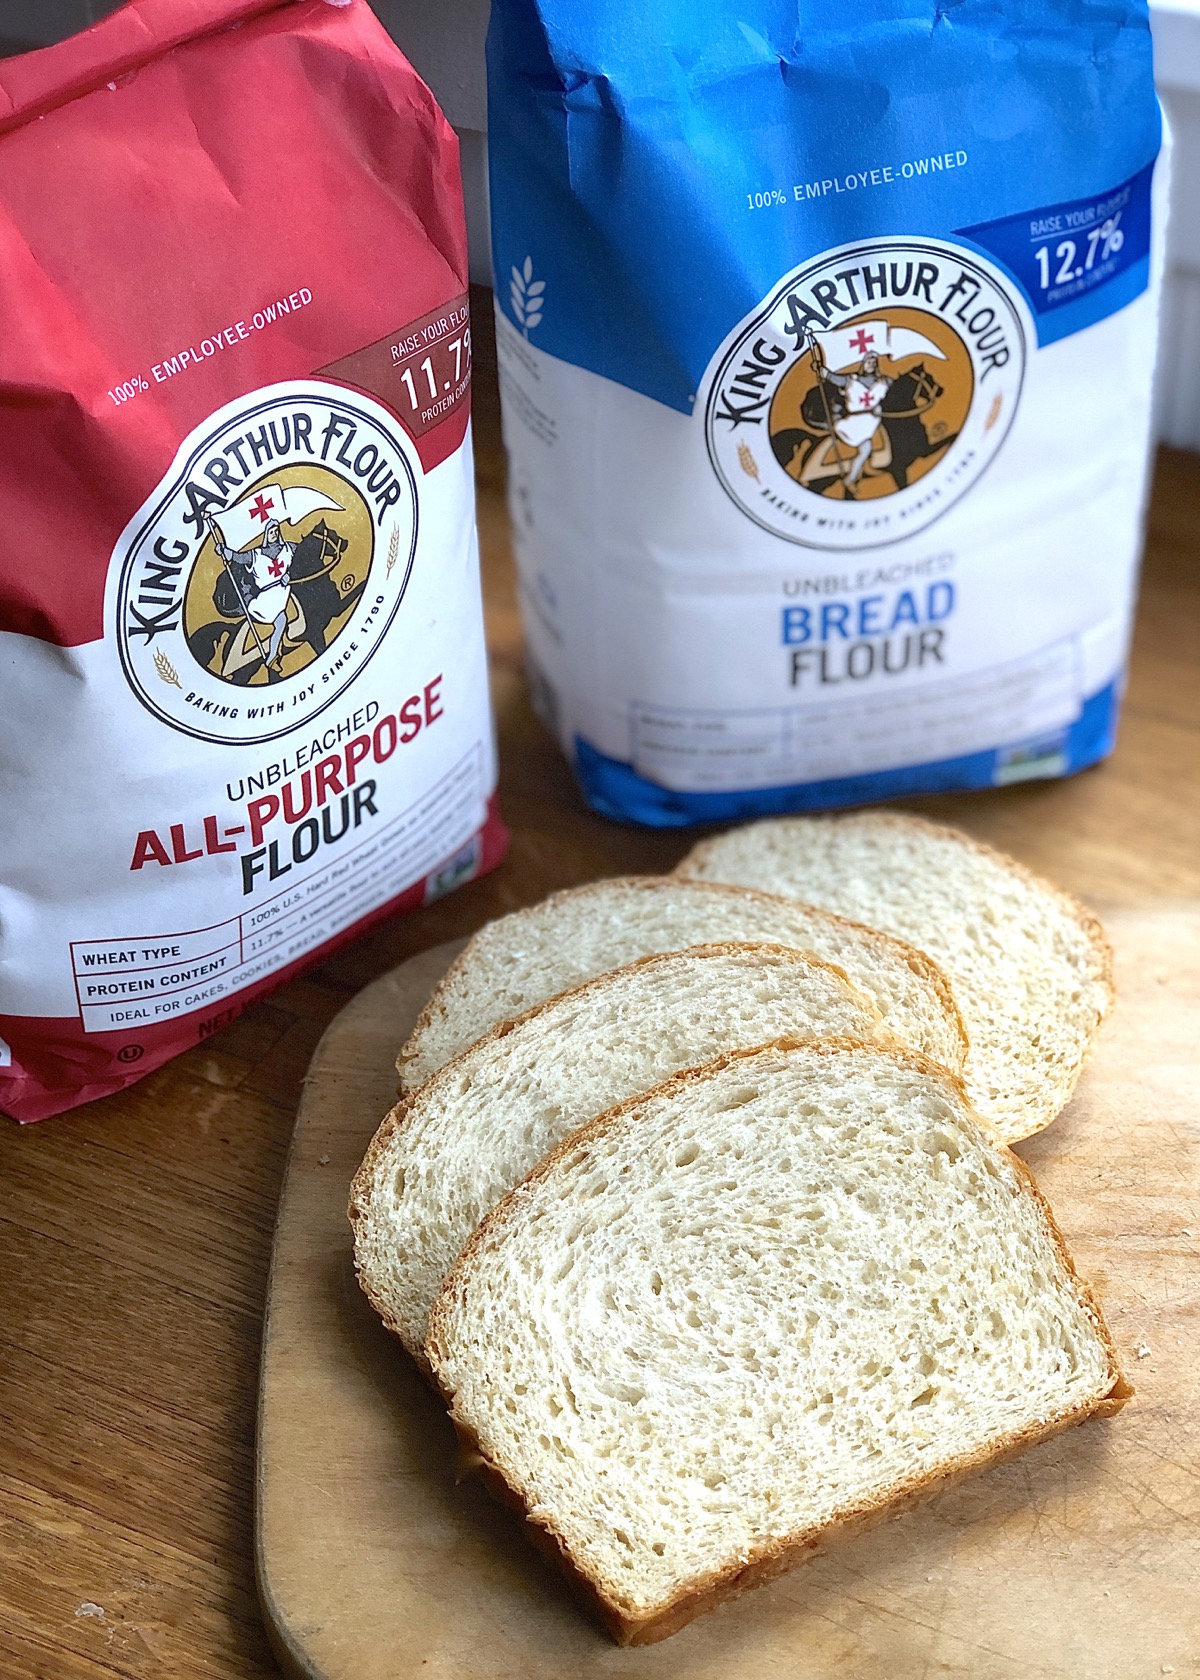 Bags of King Arthur all-purpose flour and bread flour, plus sliced oatmeal bread on a board